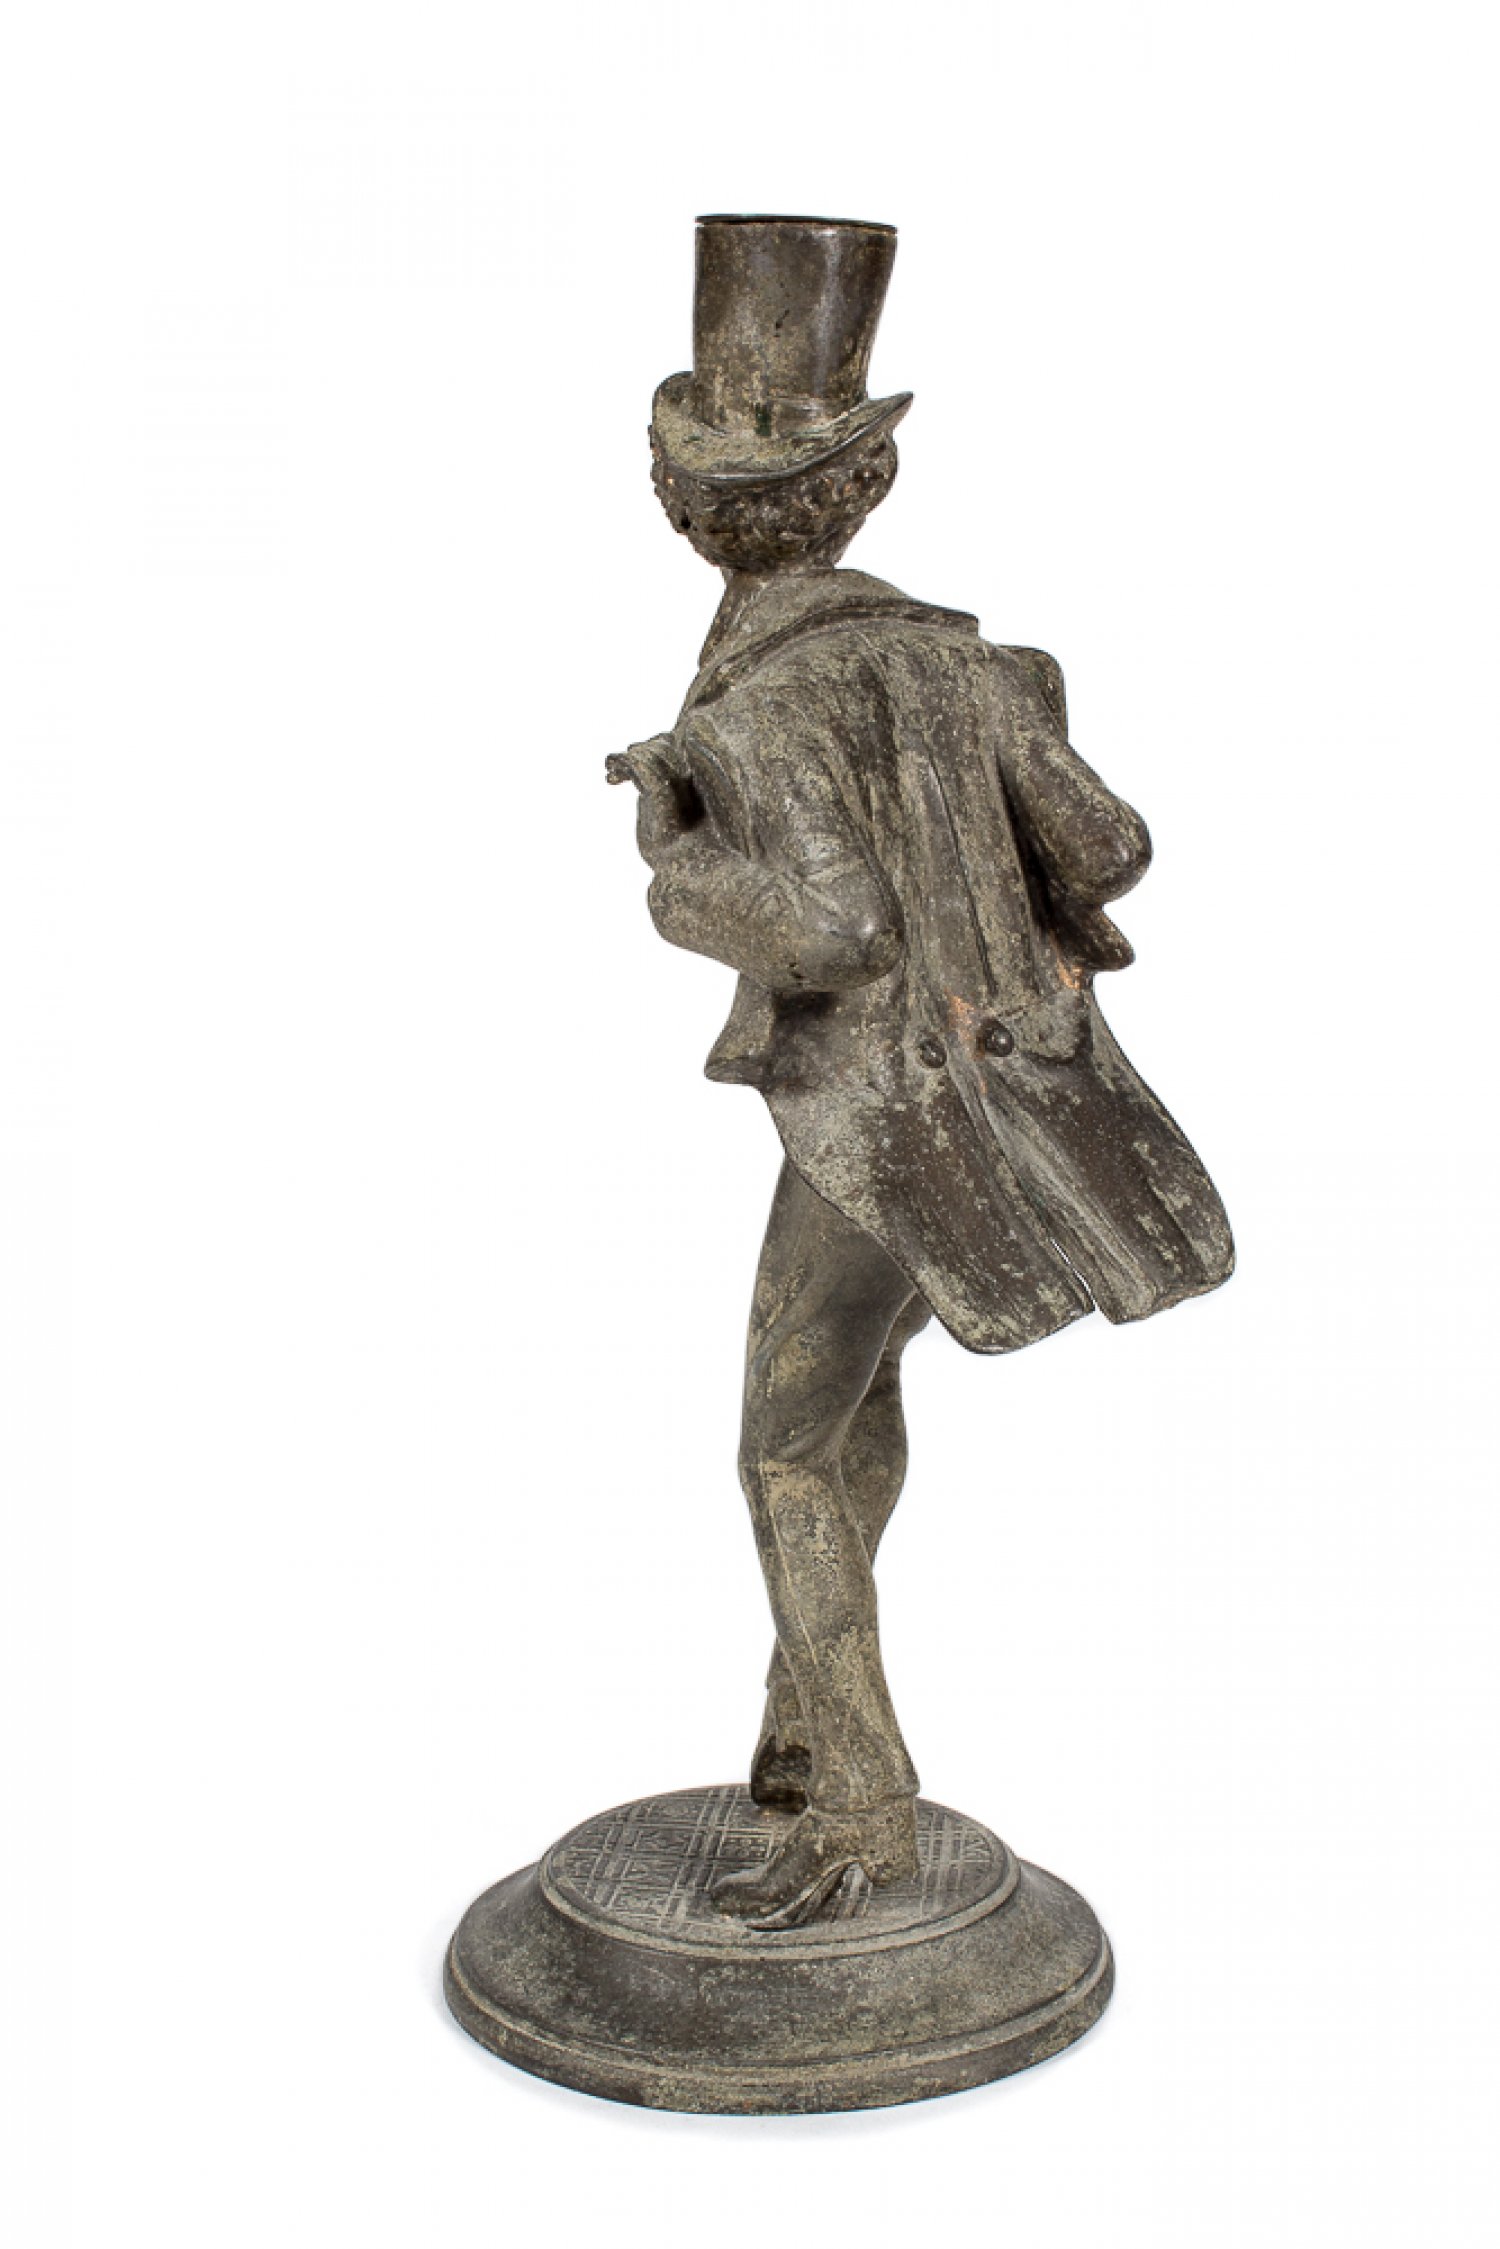 Spelter Figural Candlestick Figure of a Dandy